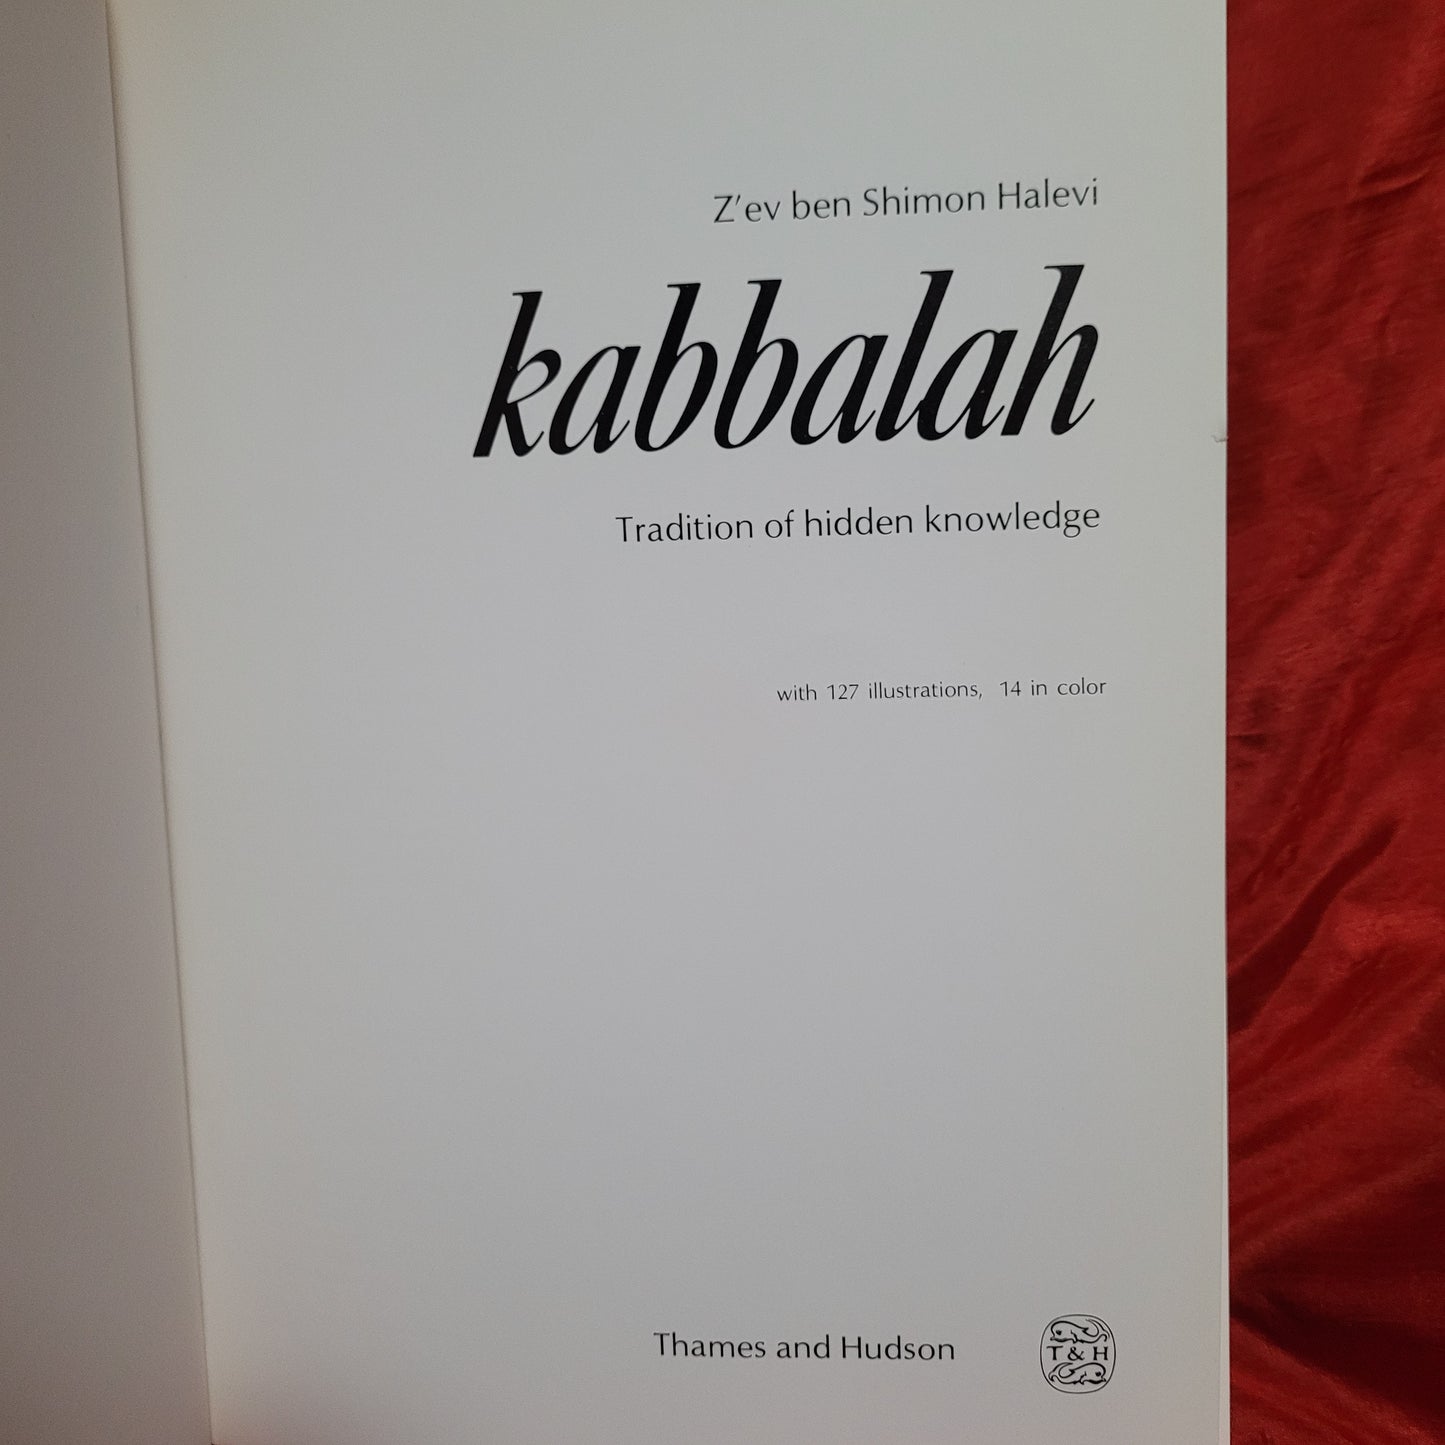 Kabbalah: Tradition of Hidden Knowledge by Z'ev ben Shimon Halevi (Thames and Hudson, 1998) Paperback